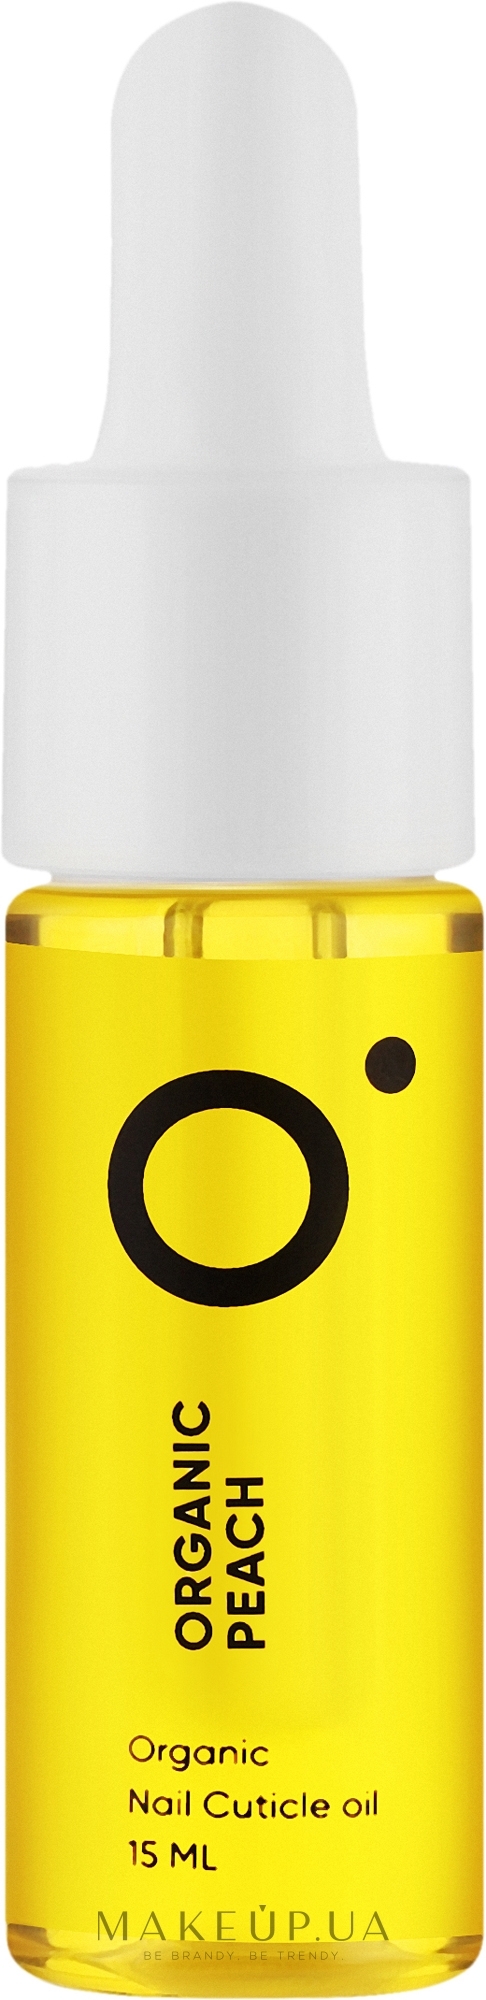 Олія для кутикули "Персик" - Nails Of The Day Organic Nail Cuticle Oil — фото 15ml